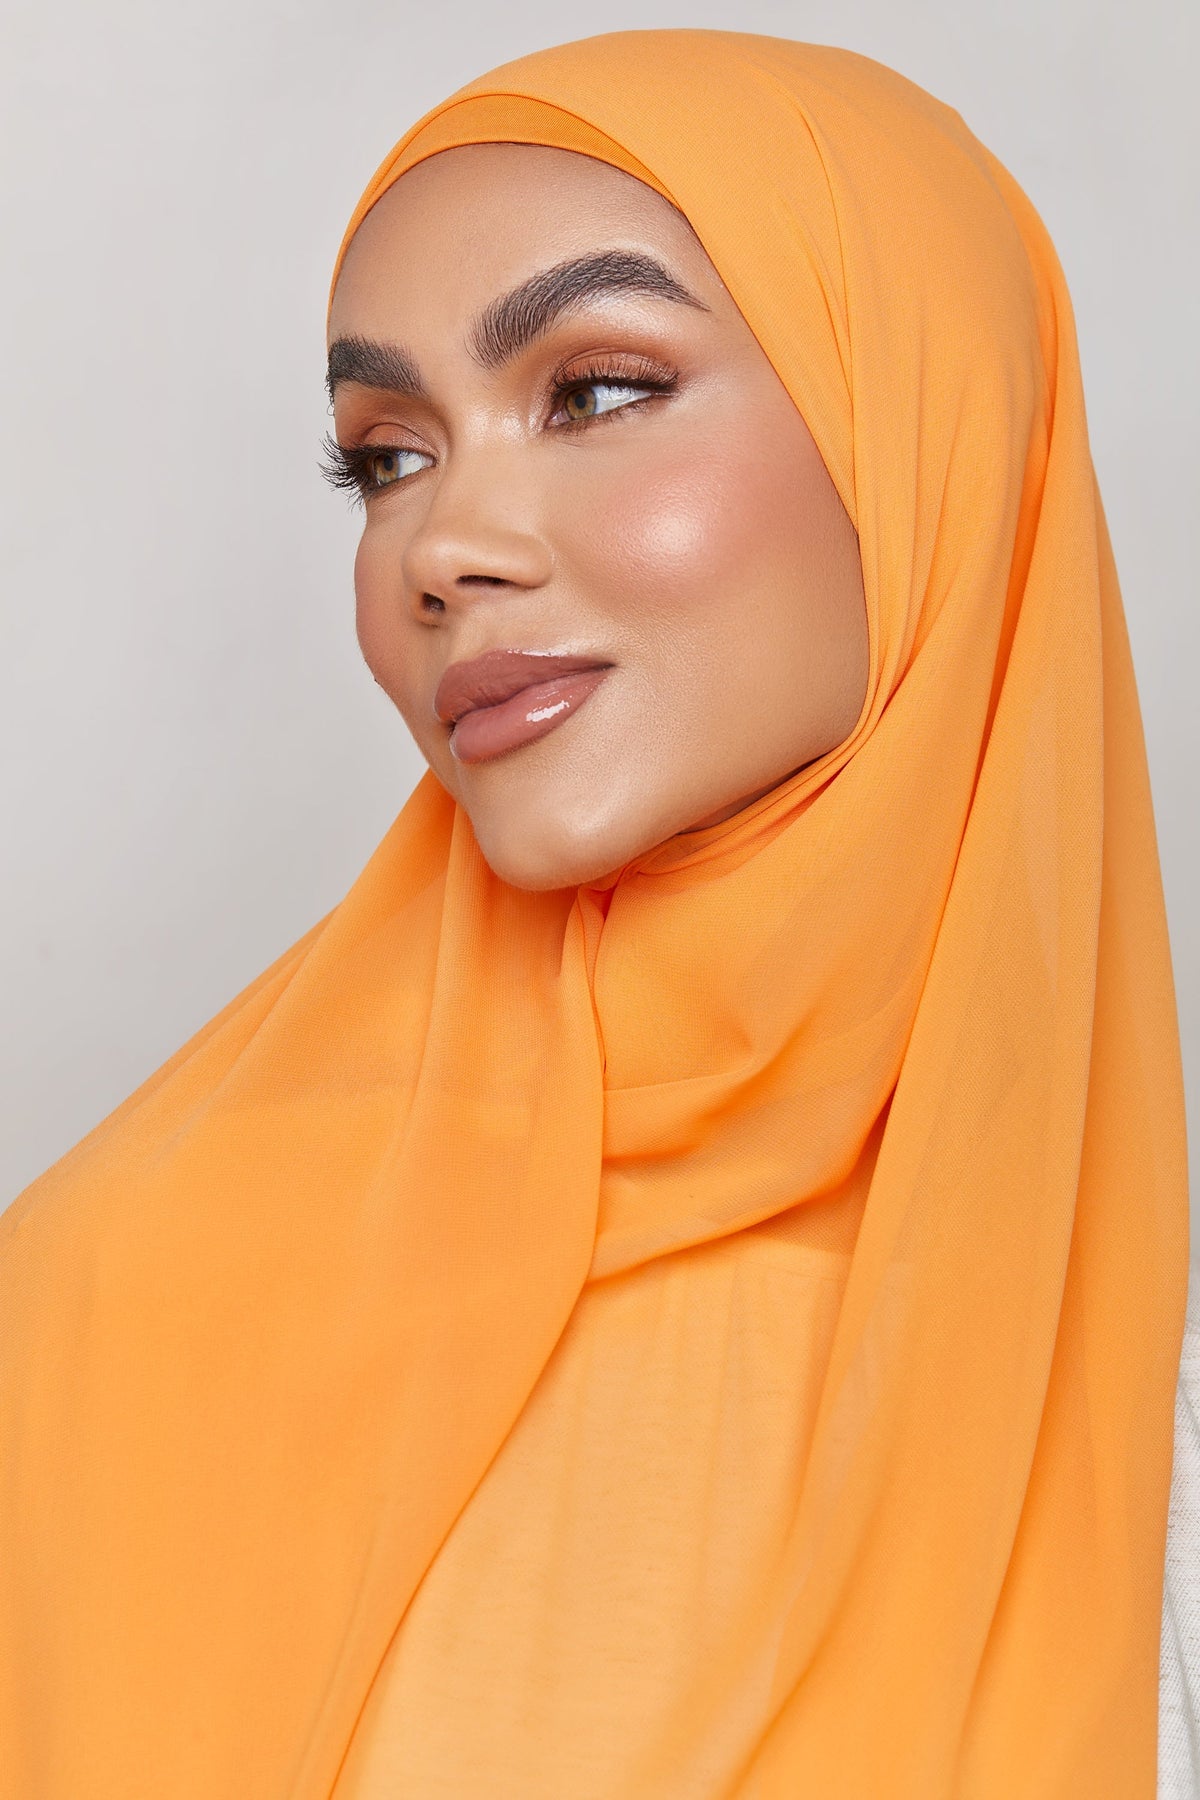 Chiffon LITE Hijab - Tangerine epschoolboard 